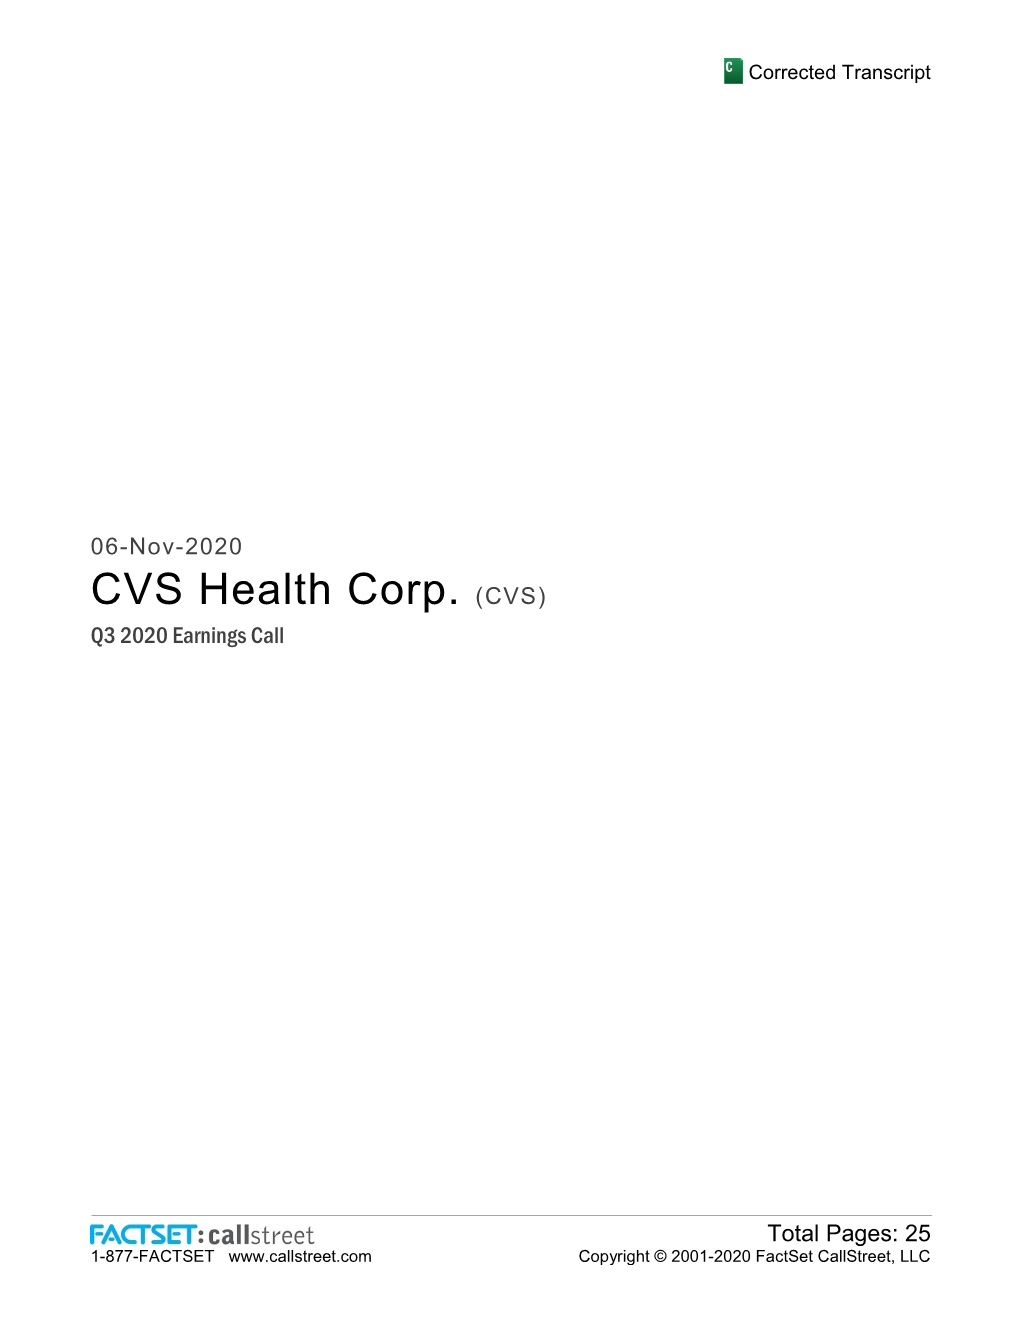 CVS Health Corp. (CVS) Q3 2020 Earnings Call